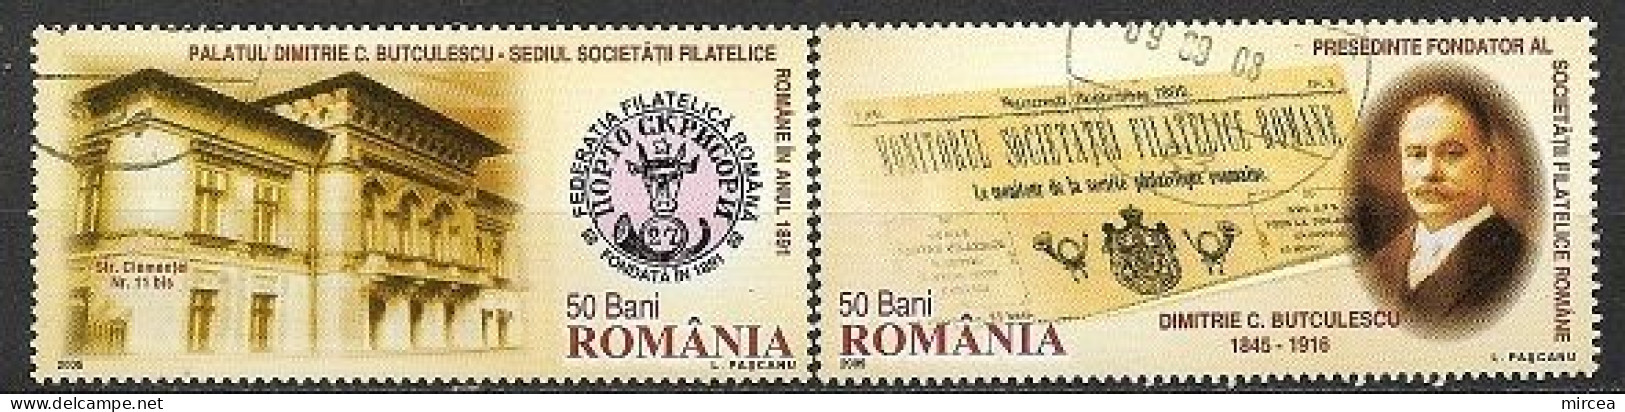 C3981 - Roumanie 2005 - 2v.obliteres - Gebraucht